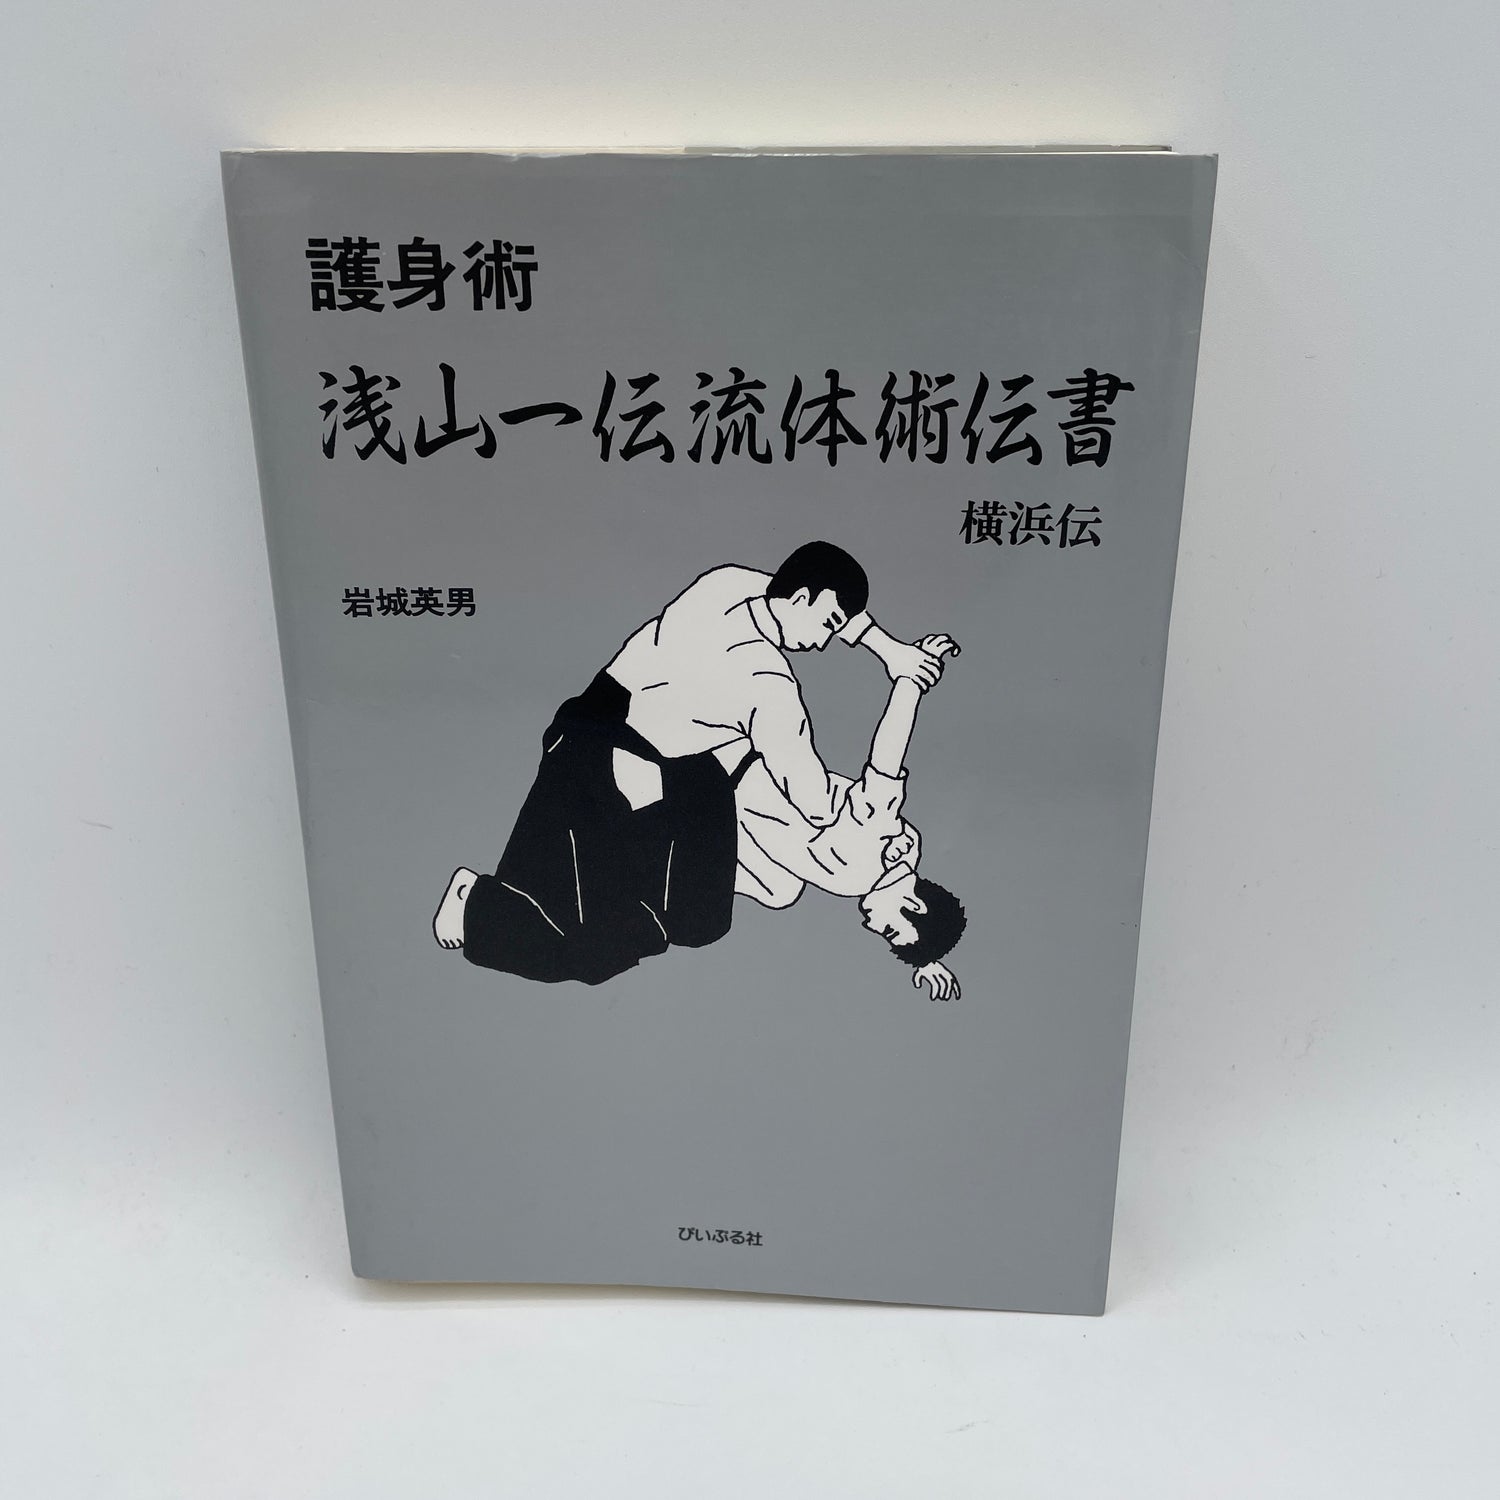 Asayama Ichiden Ryu Self Defense Book by Hideo Iwaki (Preowned)